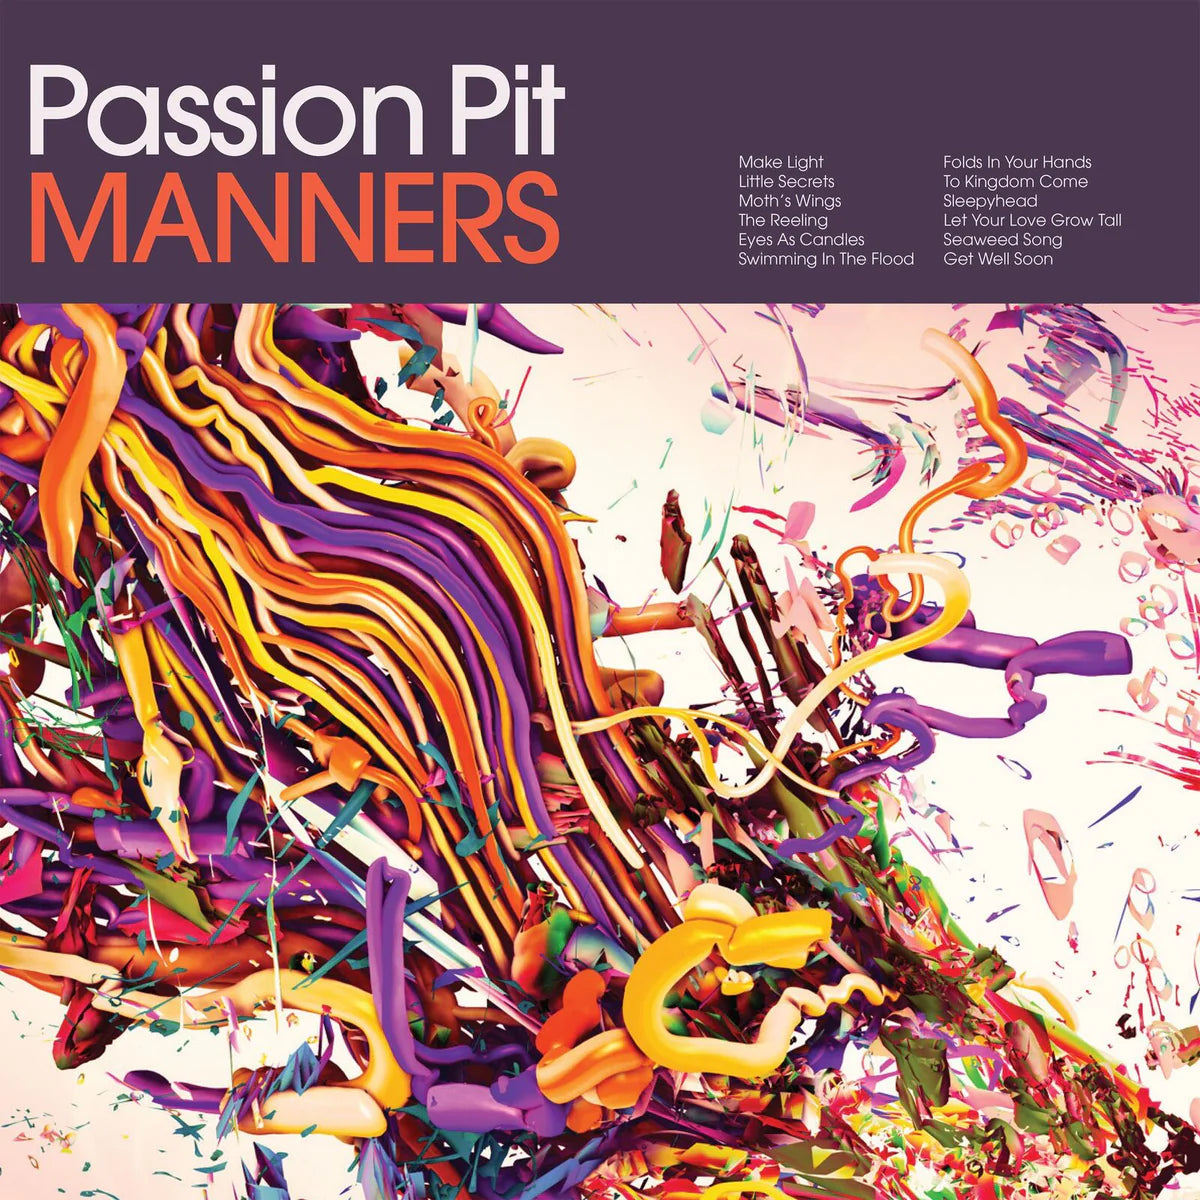 Passion Pit - Manners (15th Anniversary): Lavender Vinyl LP